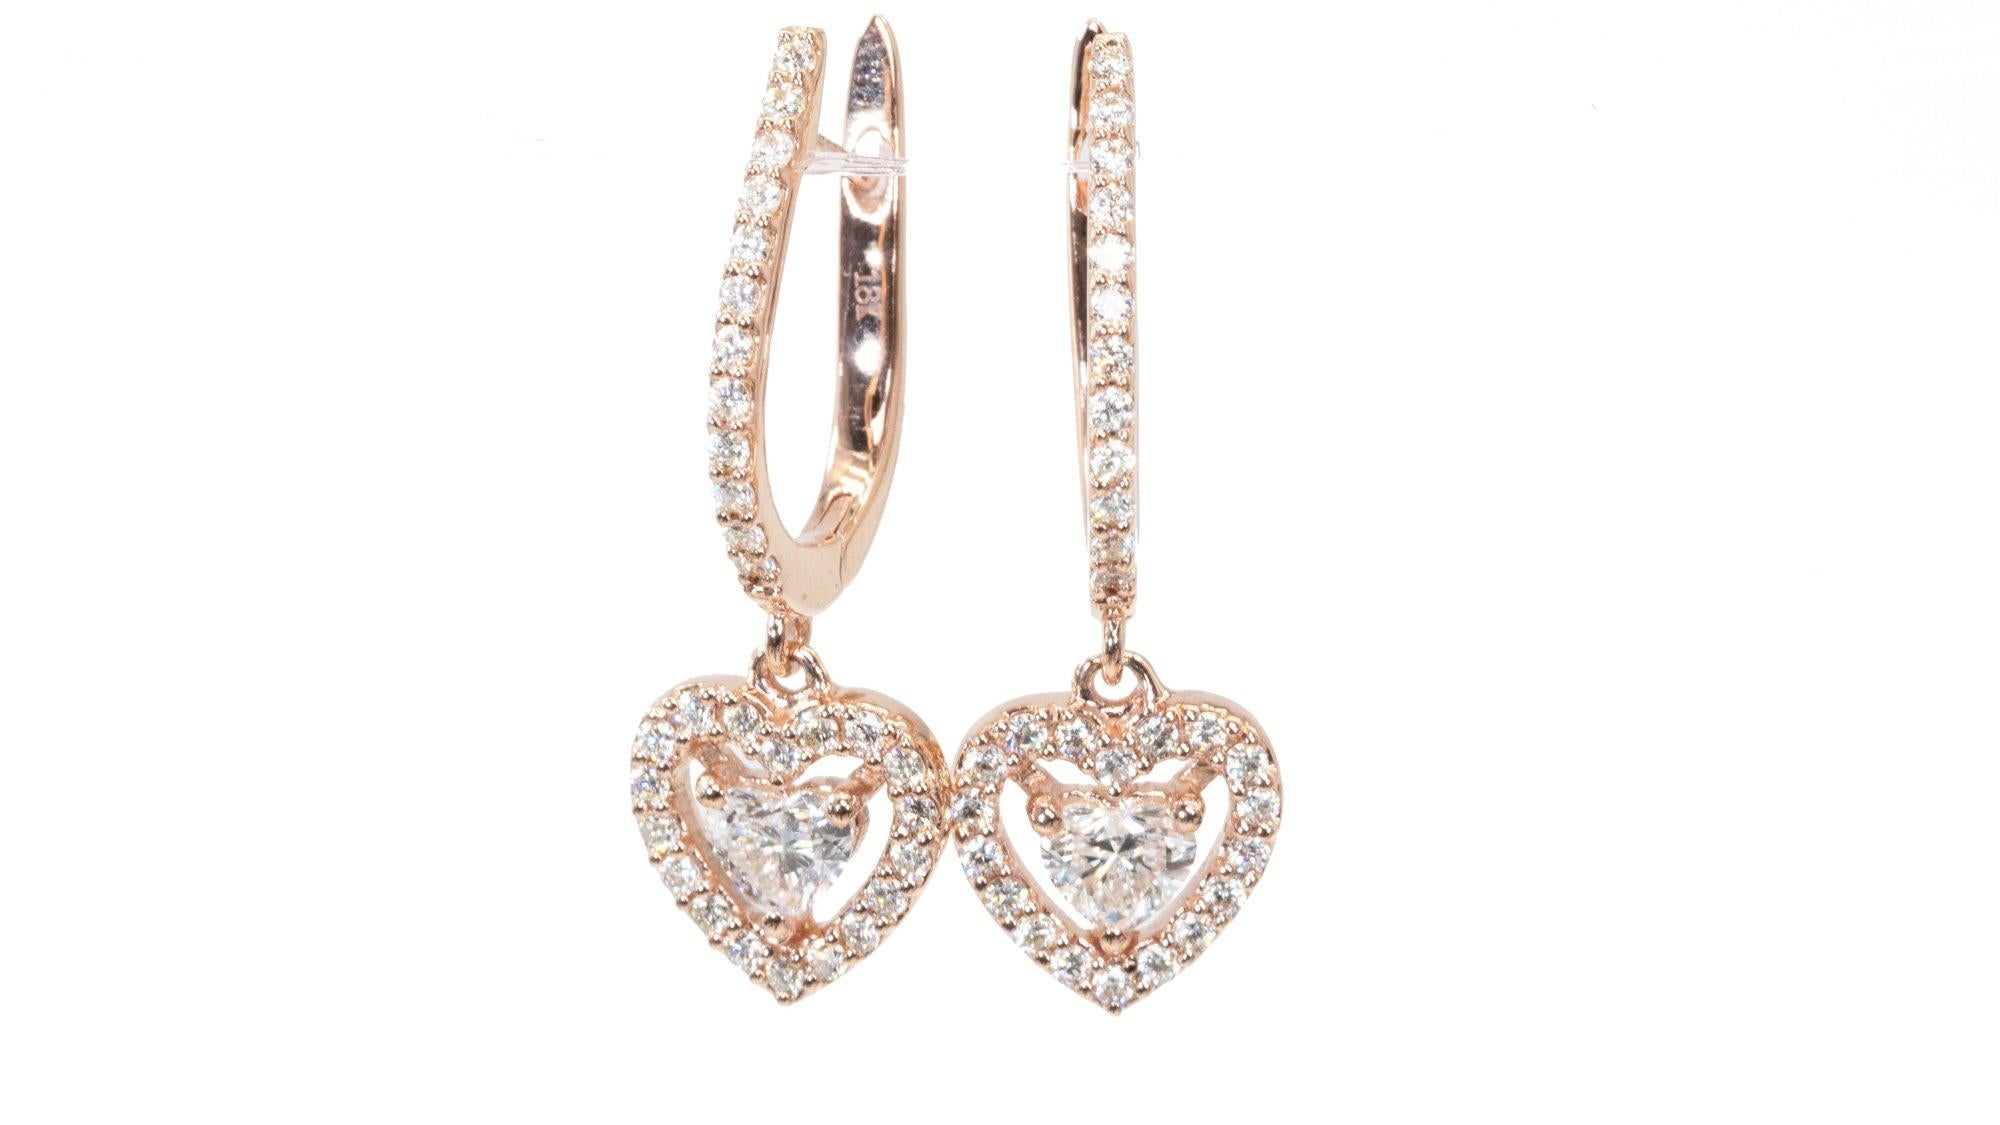 Gorgeous 18k Rose Gold Drop Earrings w/ 0.60ct Natural Diamonds, AIG Certificate 1